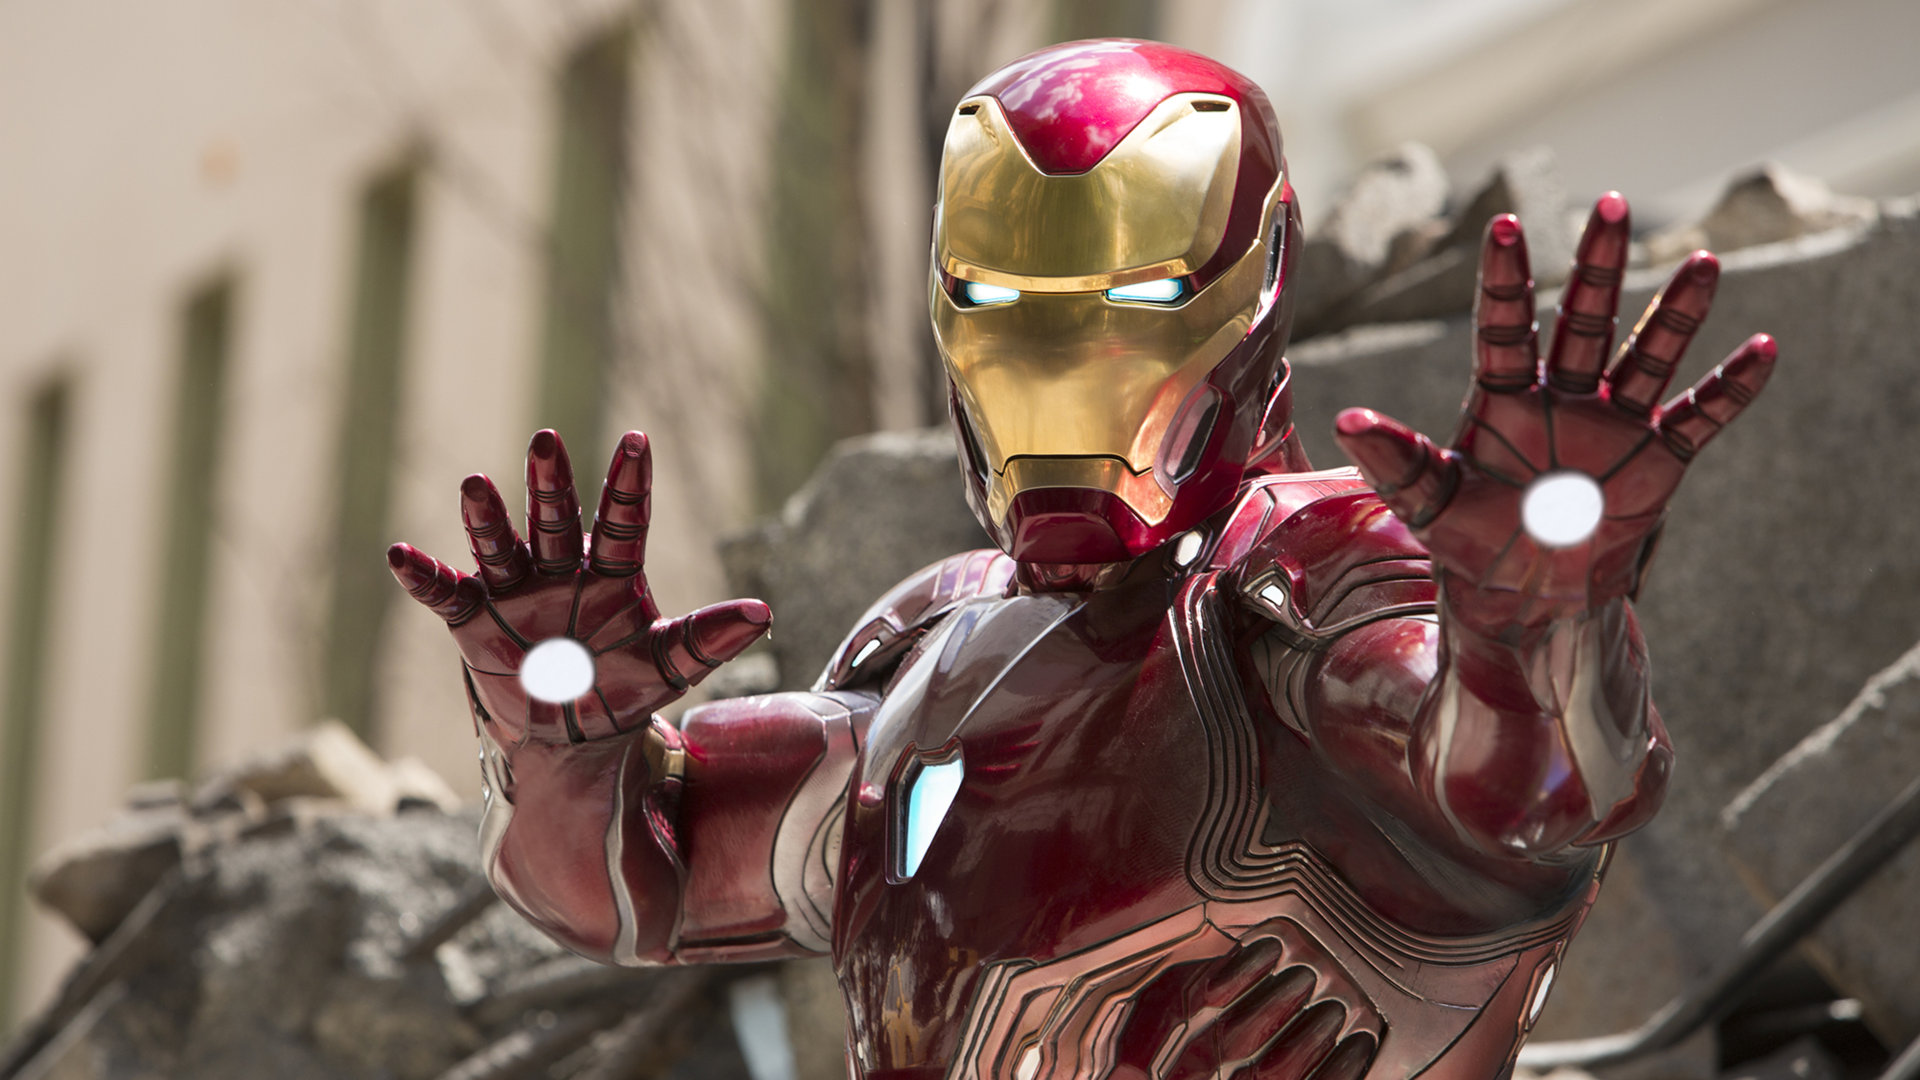 People 1920x1080 Iron Man movies Marvel Cinematic Universe armor hero